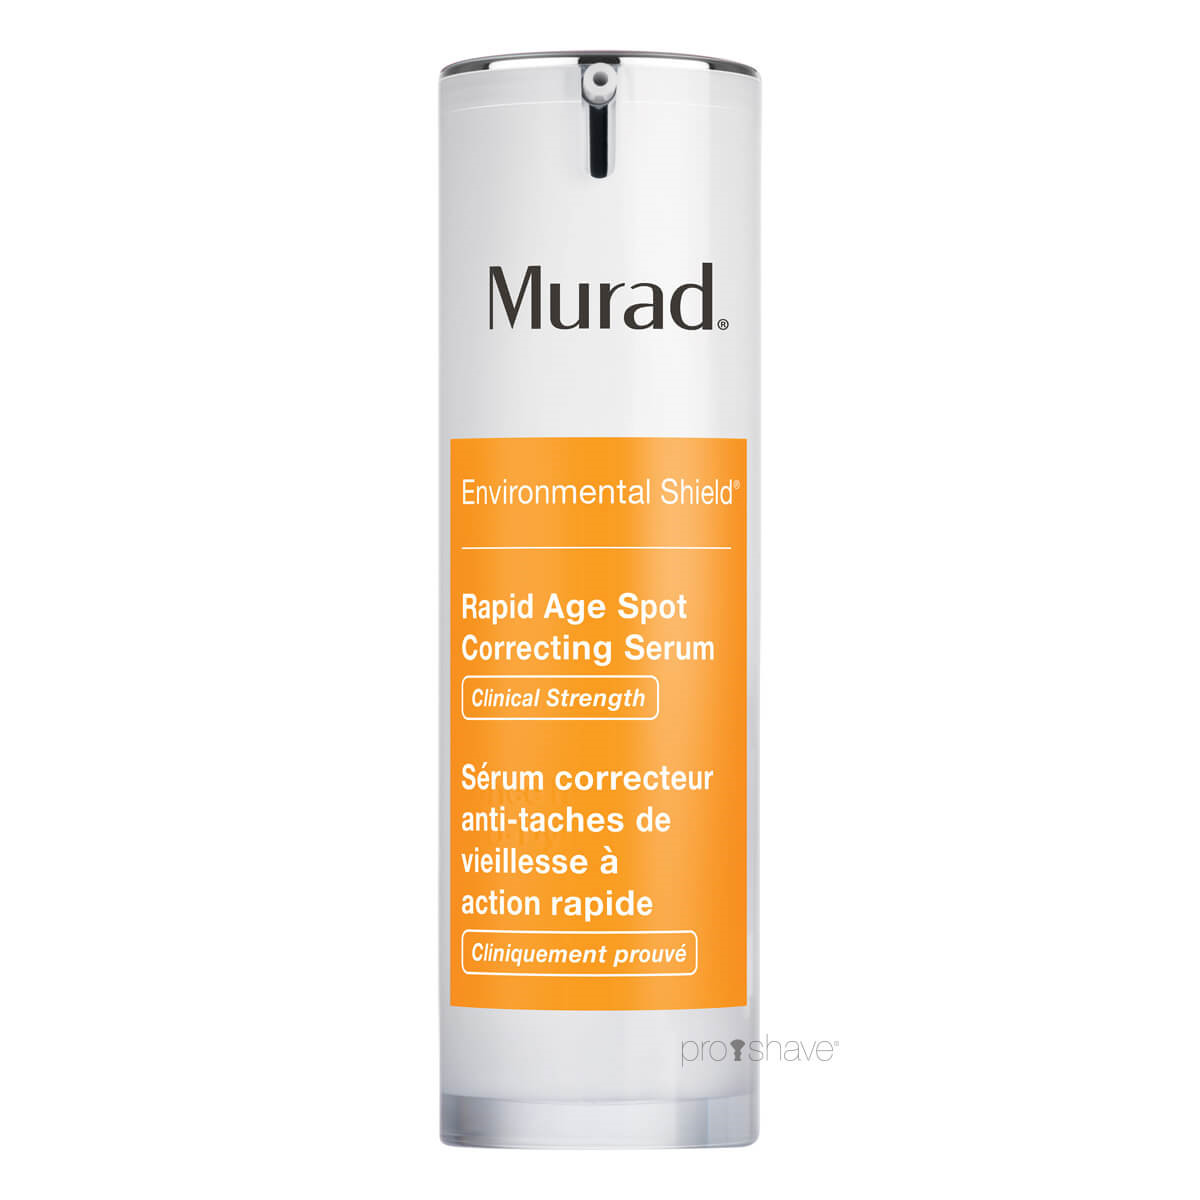 Murad Rapid Age Spot Correcting Serum, Environmental Shield, 30 ml.